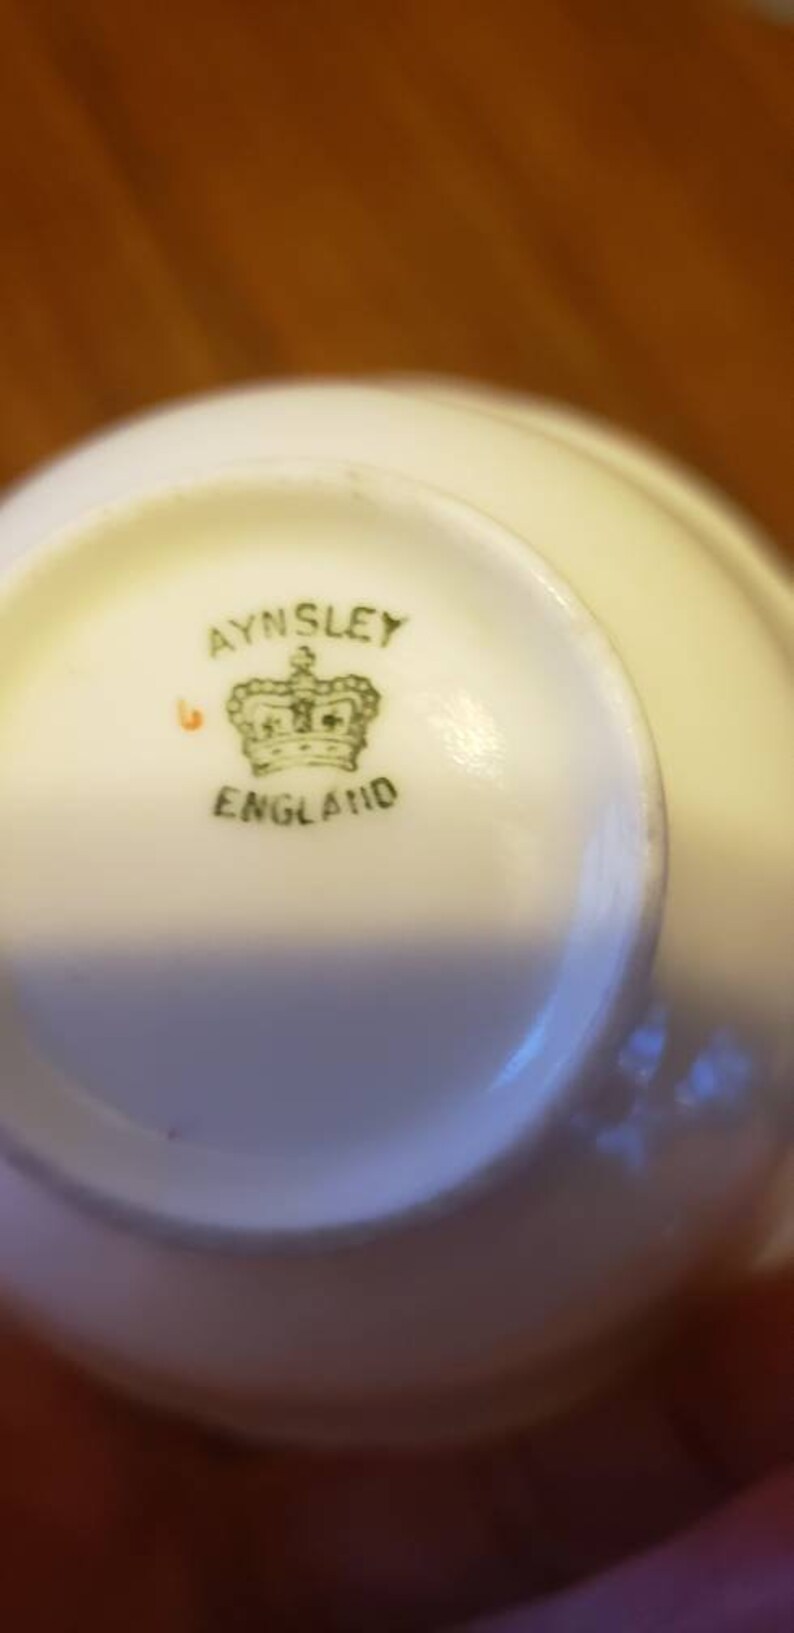 Aynsley shamrock teacup